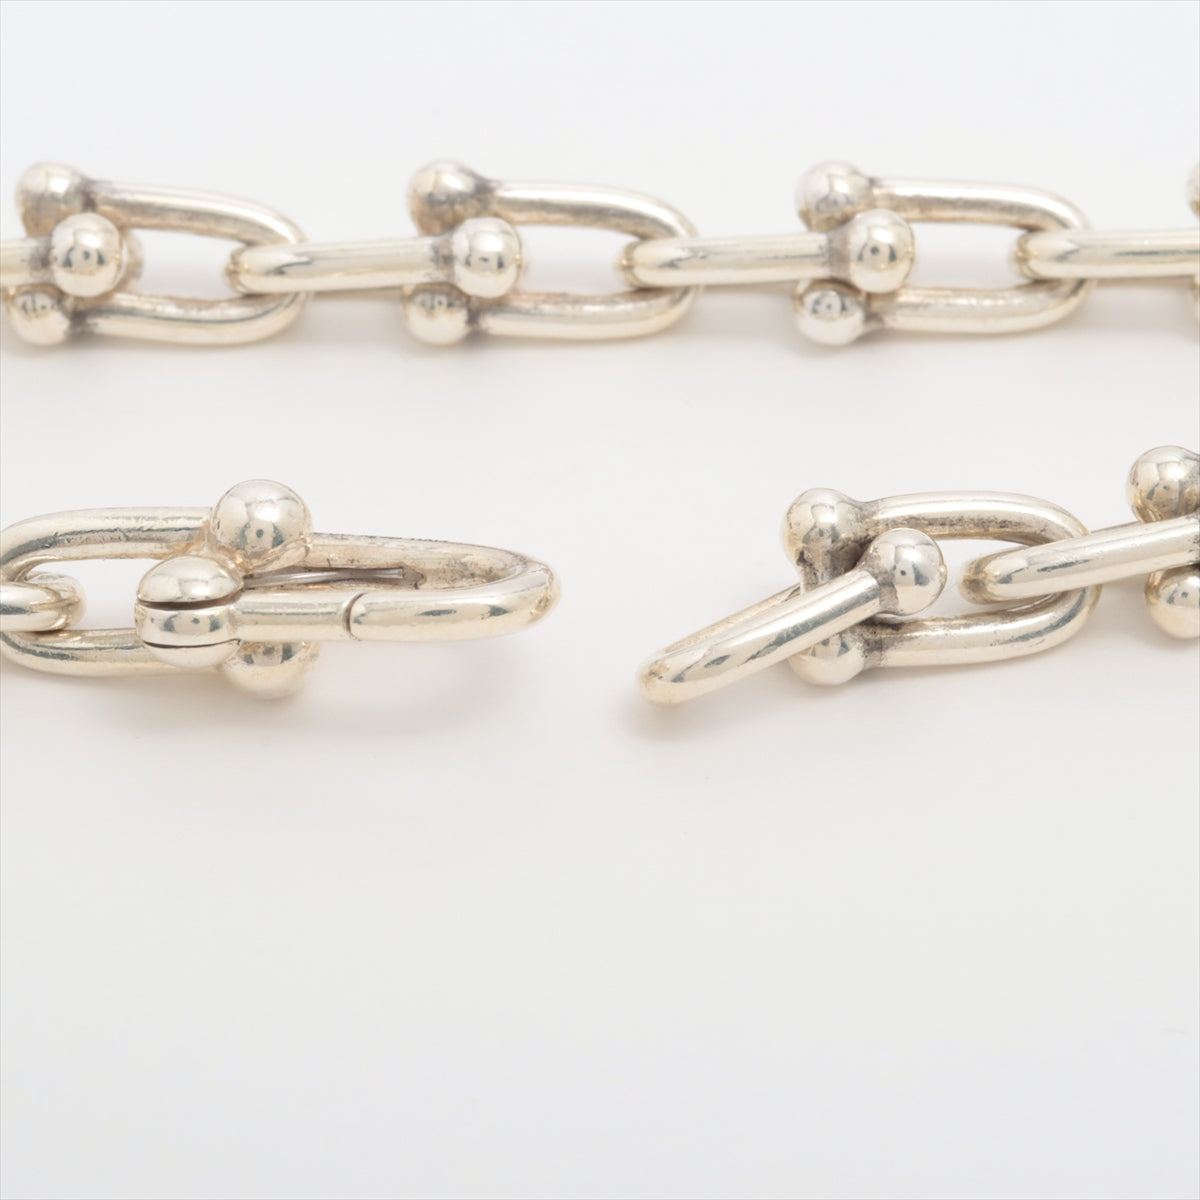 Tiffany Hardware small link Bracelet 925 18.1g Silver